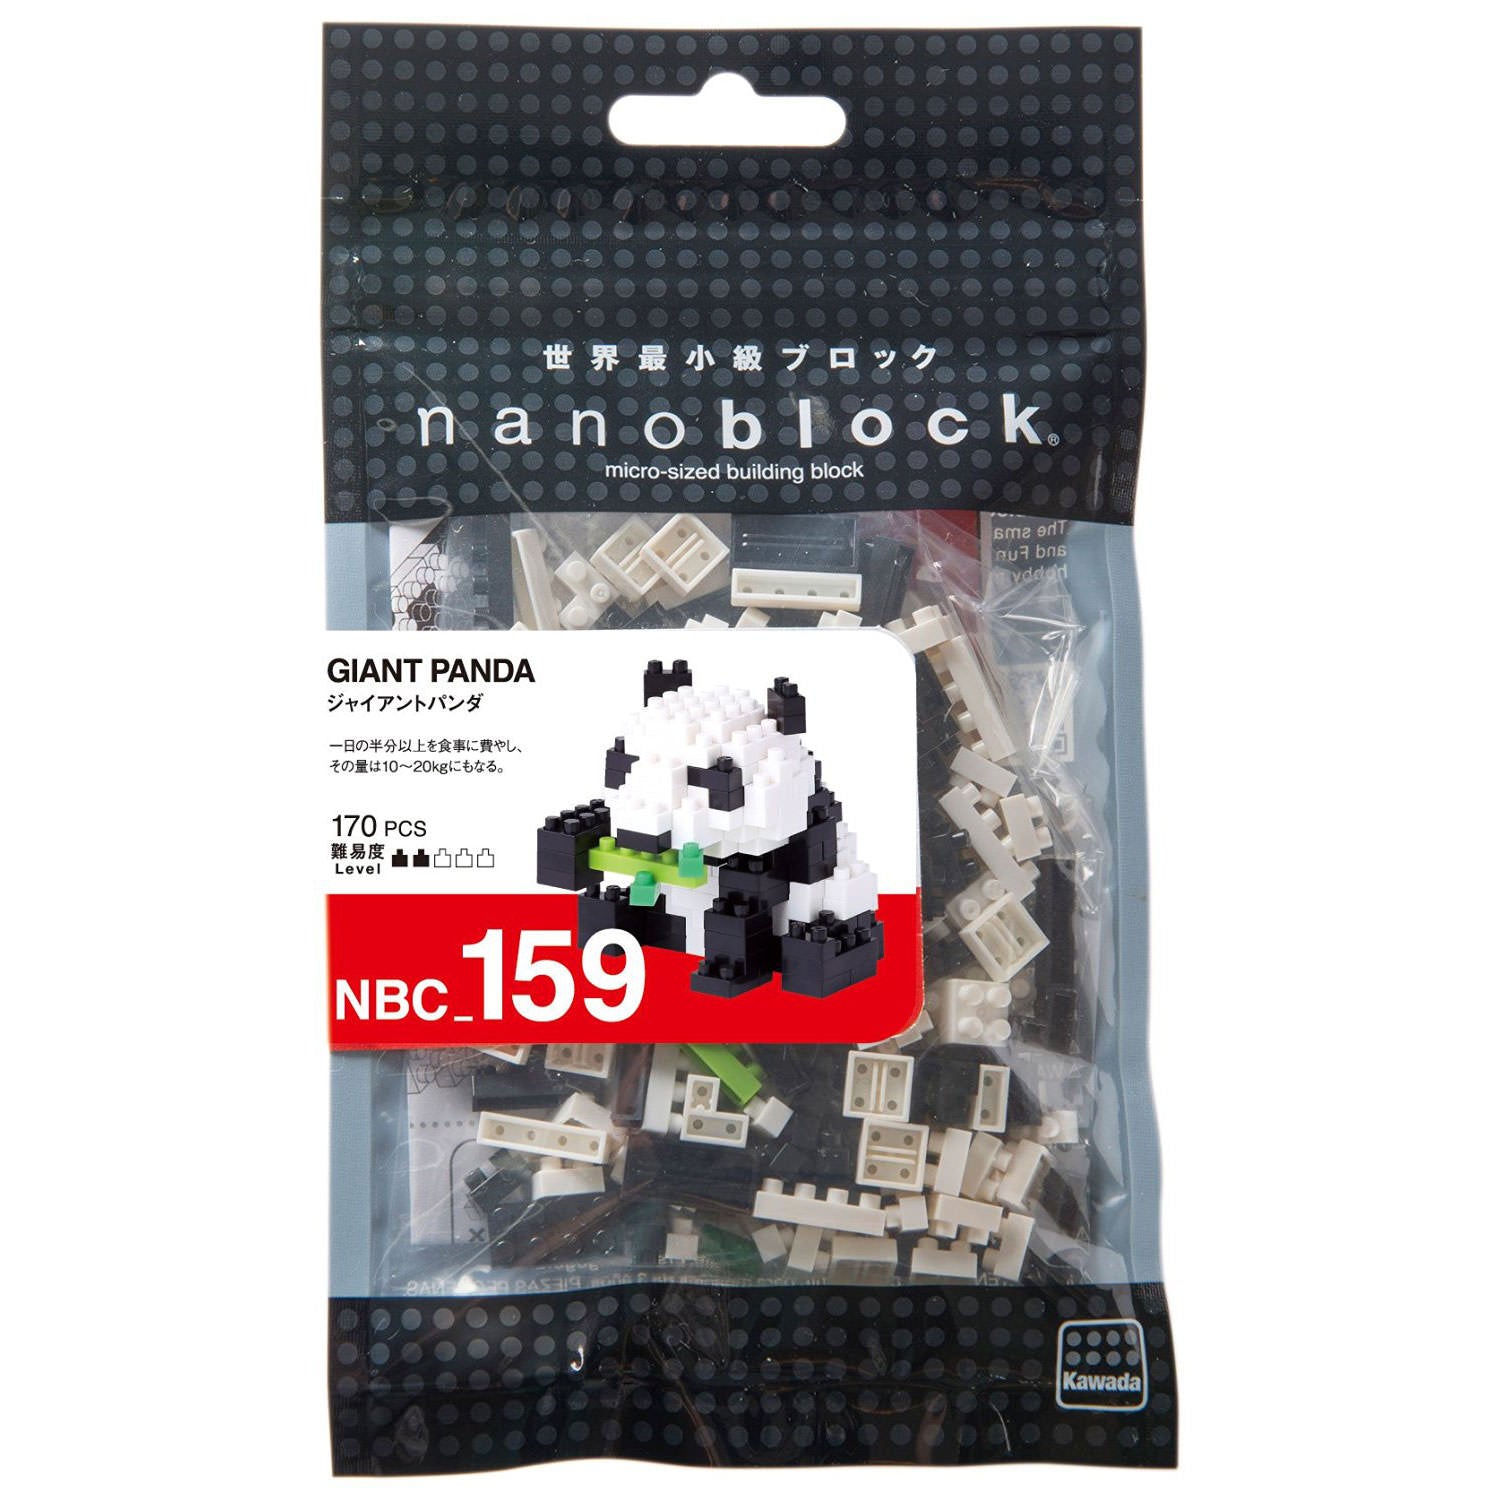 Giant Panda - Nanoblock